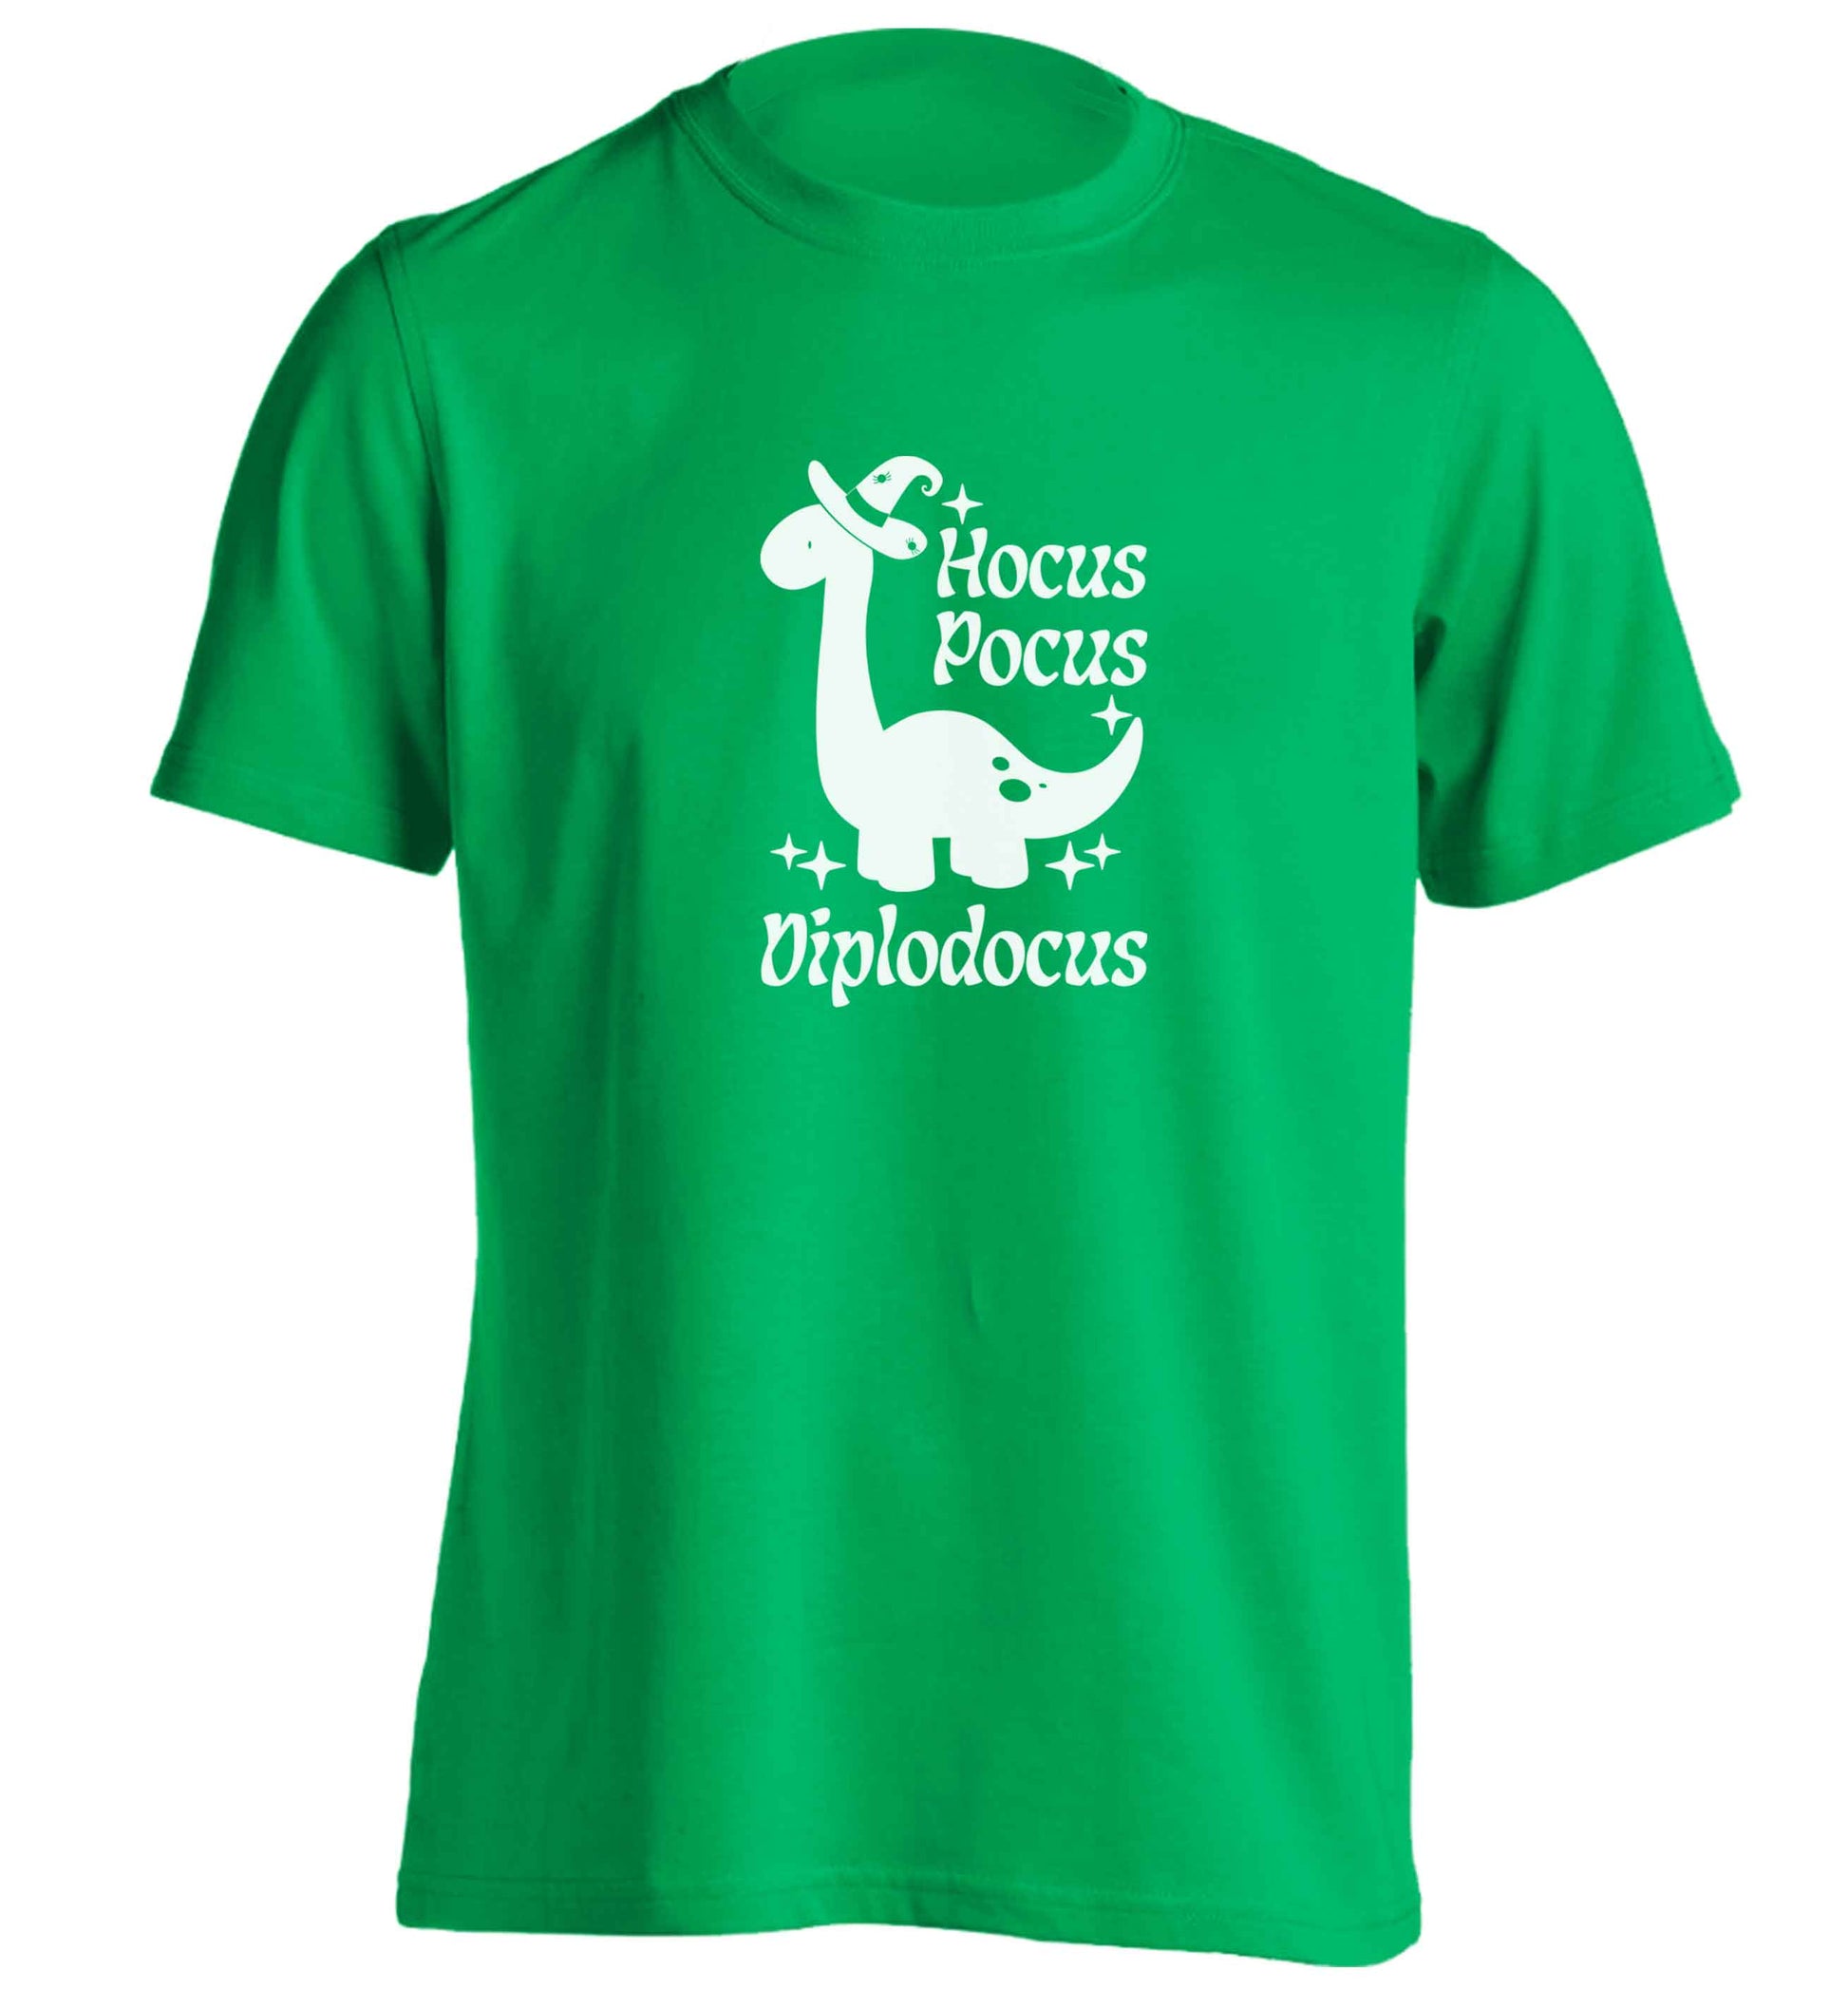 Hocus pocus diplodocus Kit adults unisex green Tshirt 2XL